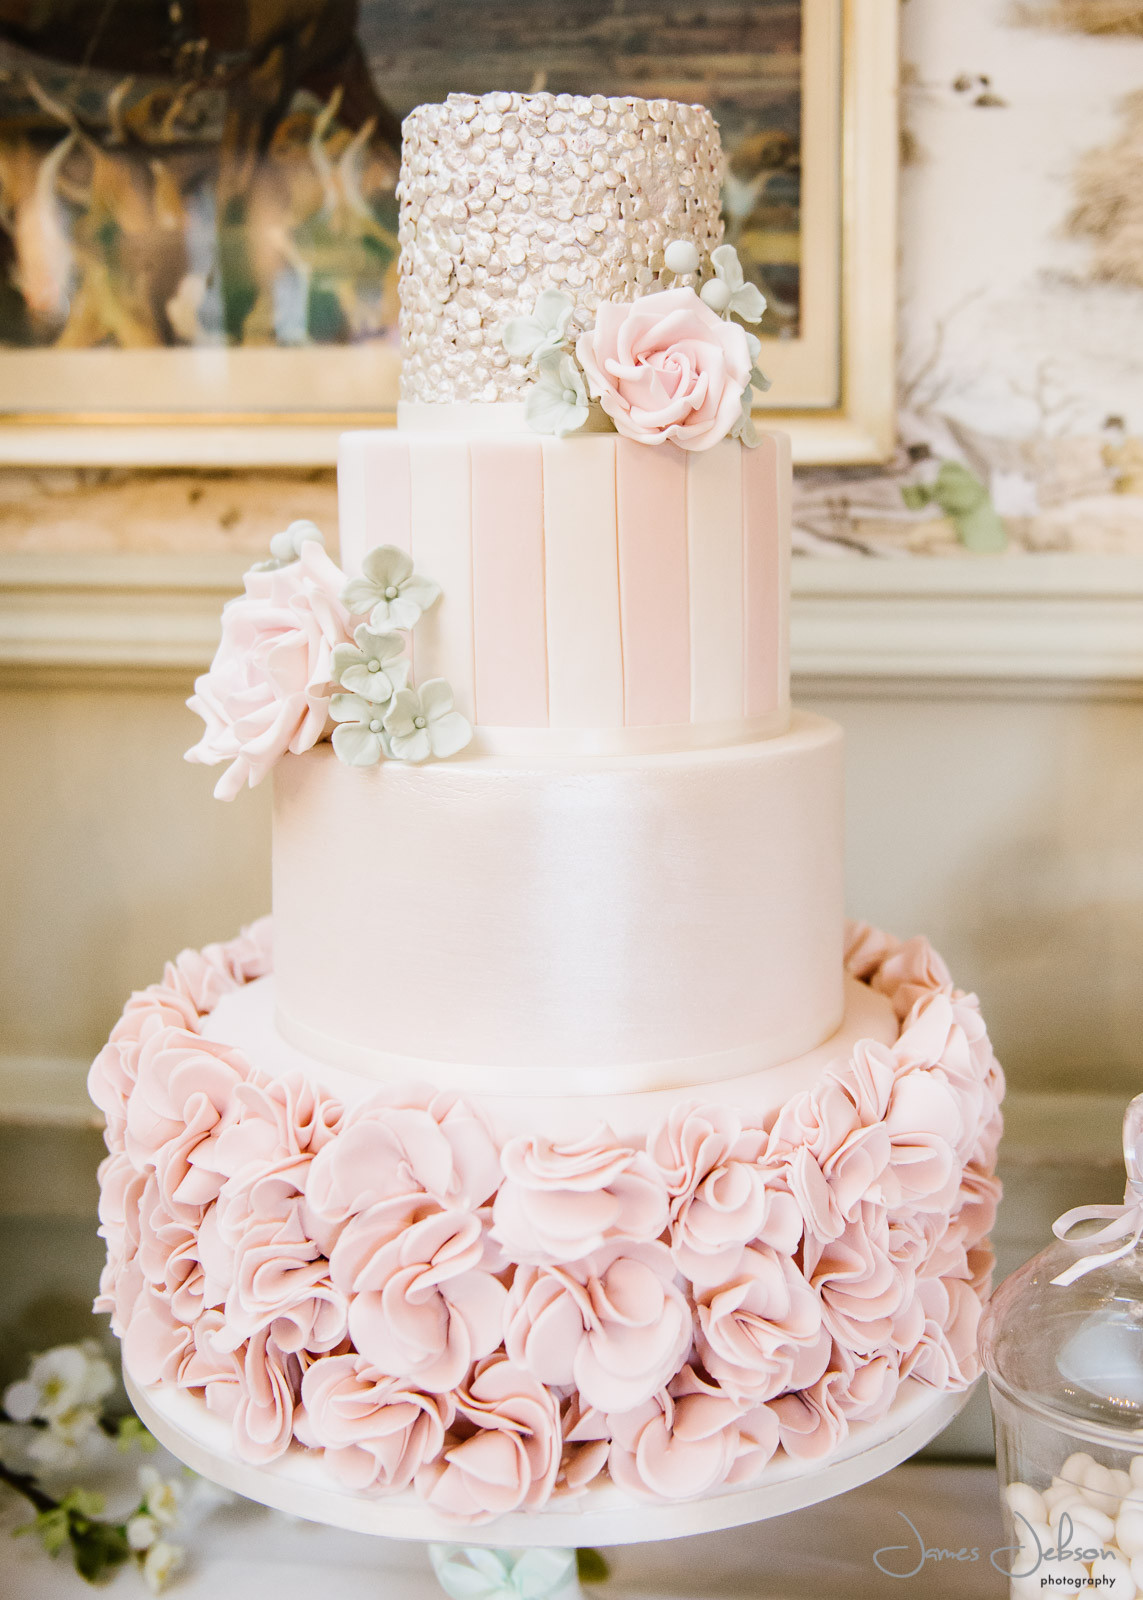 Wedding Cakes Com
 Award winning wedding cakes idea in 2017